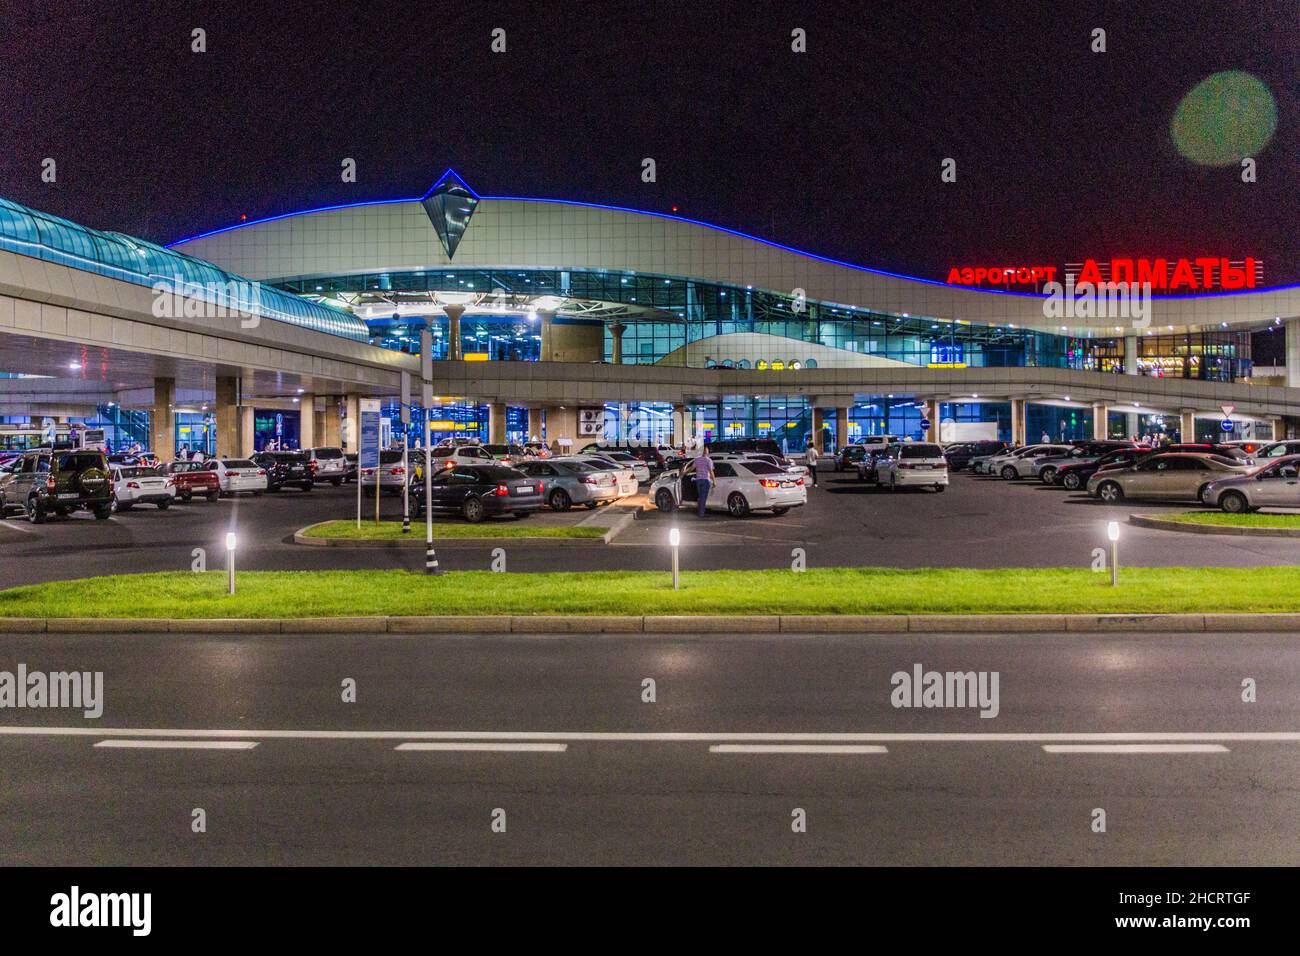 ALMATY, KAZAKHSTAN - AUGUST 1, 2018: Night view of Almaty International Airport, Kazakhstan. Stock Photo